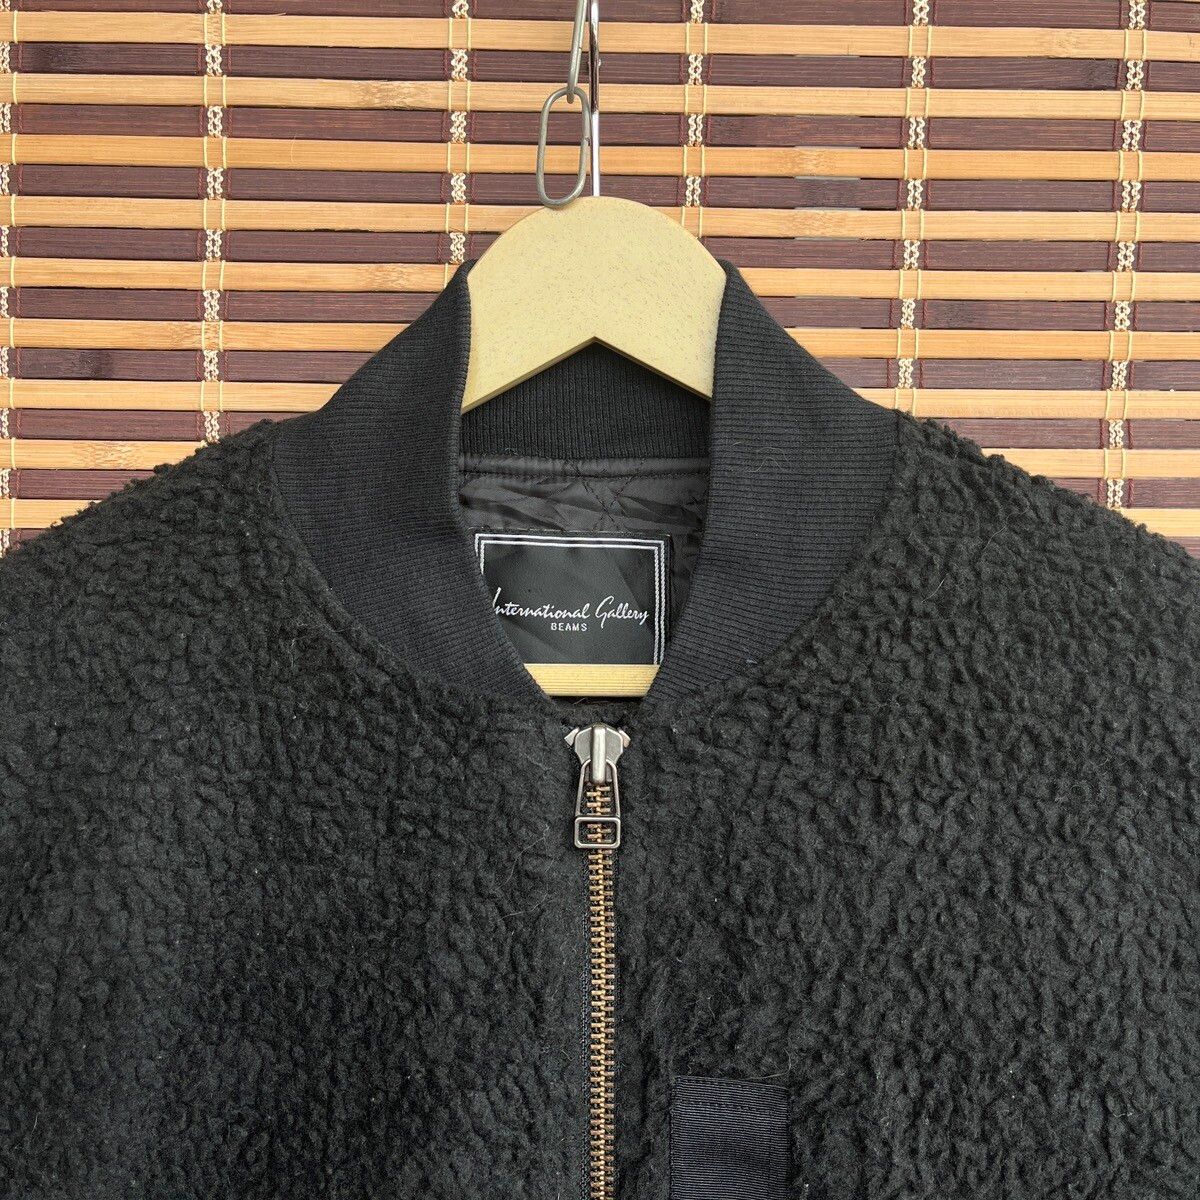 Vintage - Beams International Gallery Fleece Sweater Wool Bomber Style - 4